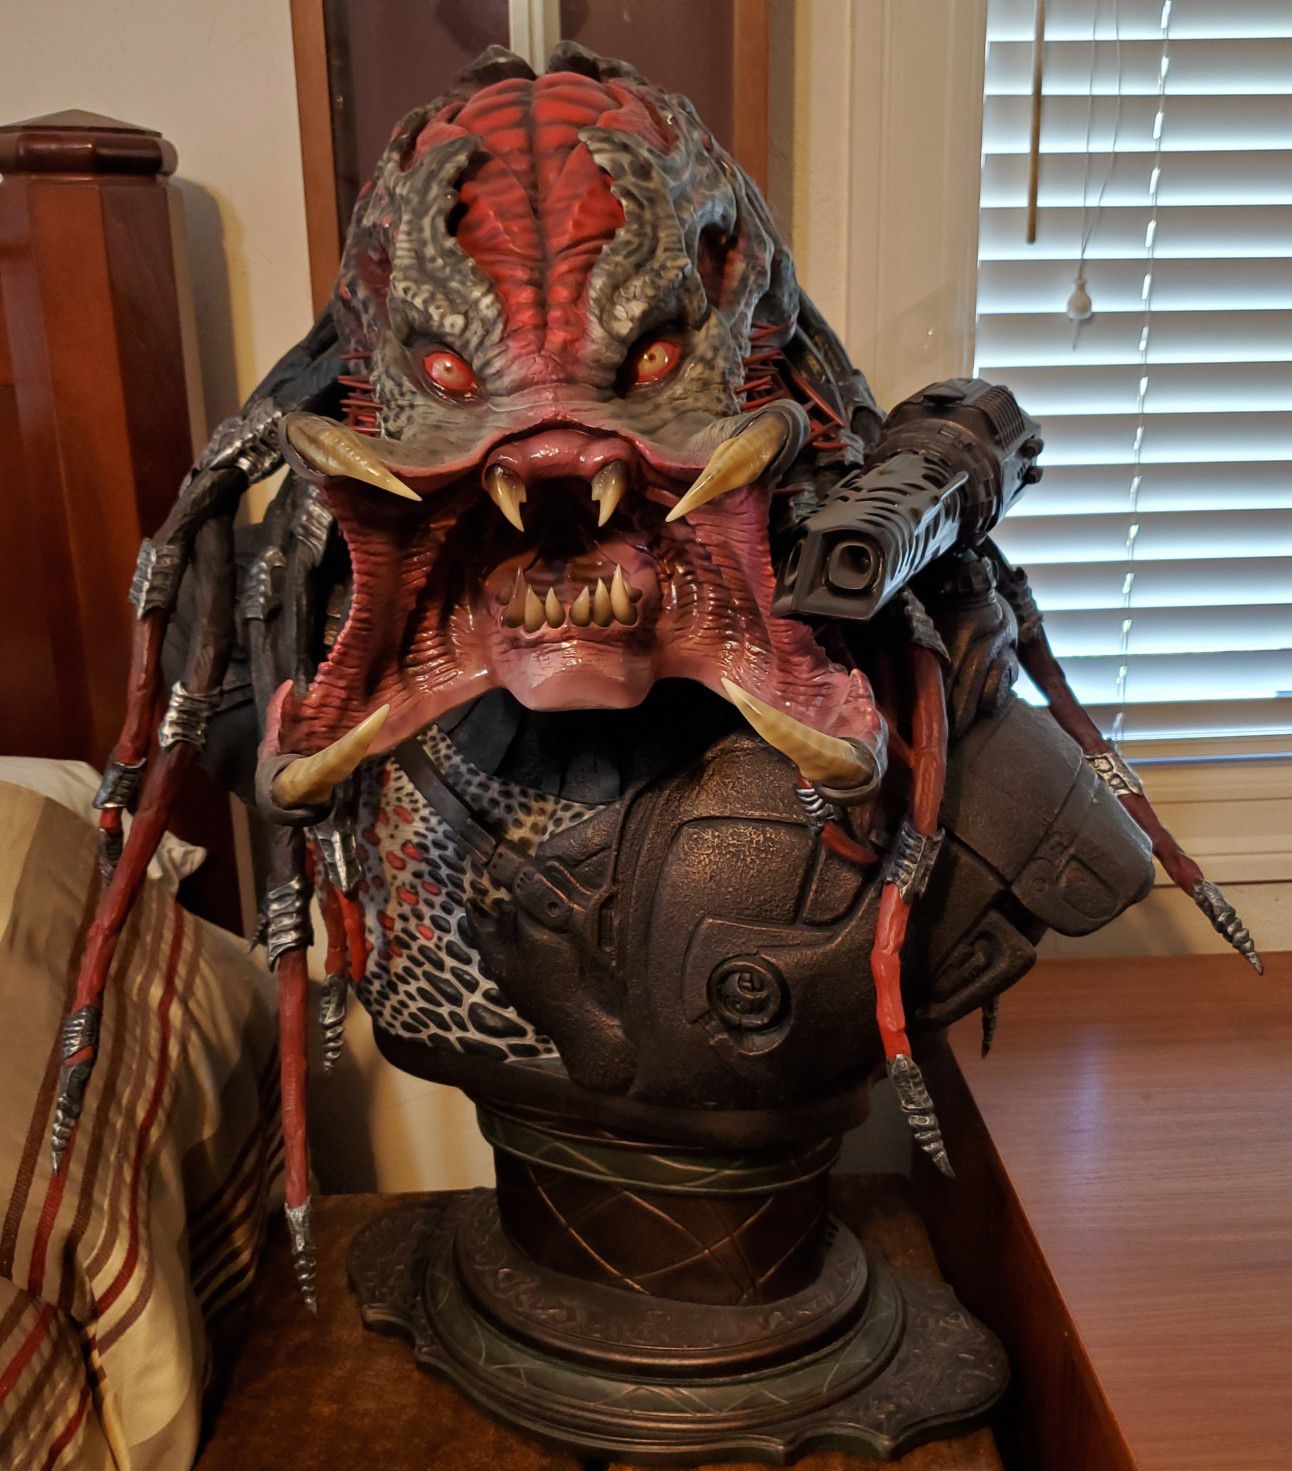 Life-size 1:1 scale Sideshow Berserker Predator Bust collectible Statue AVP alien